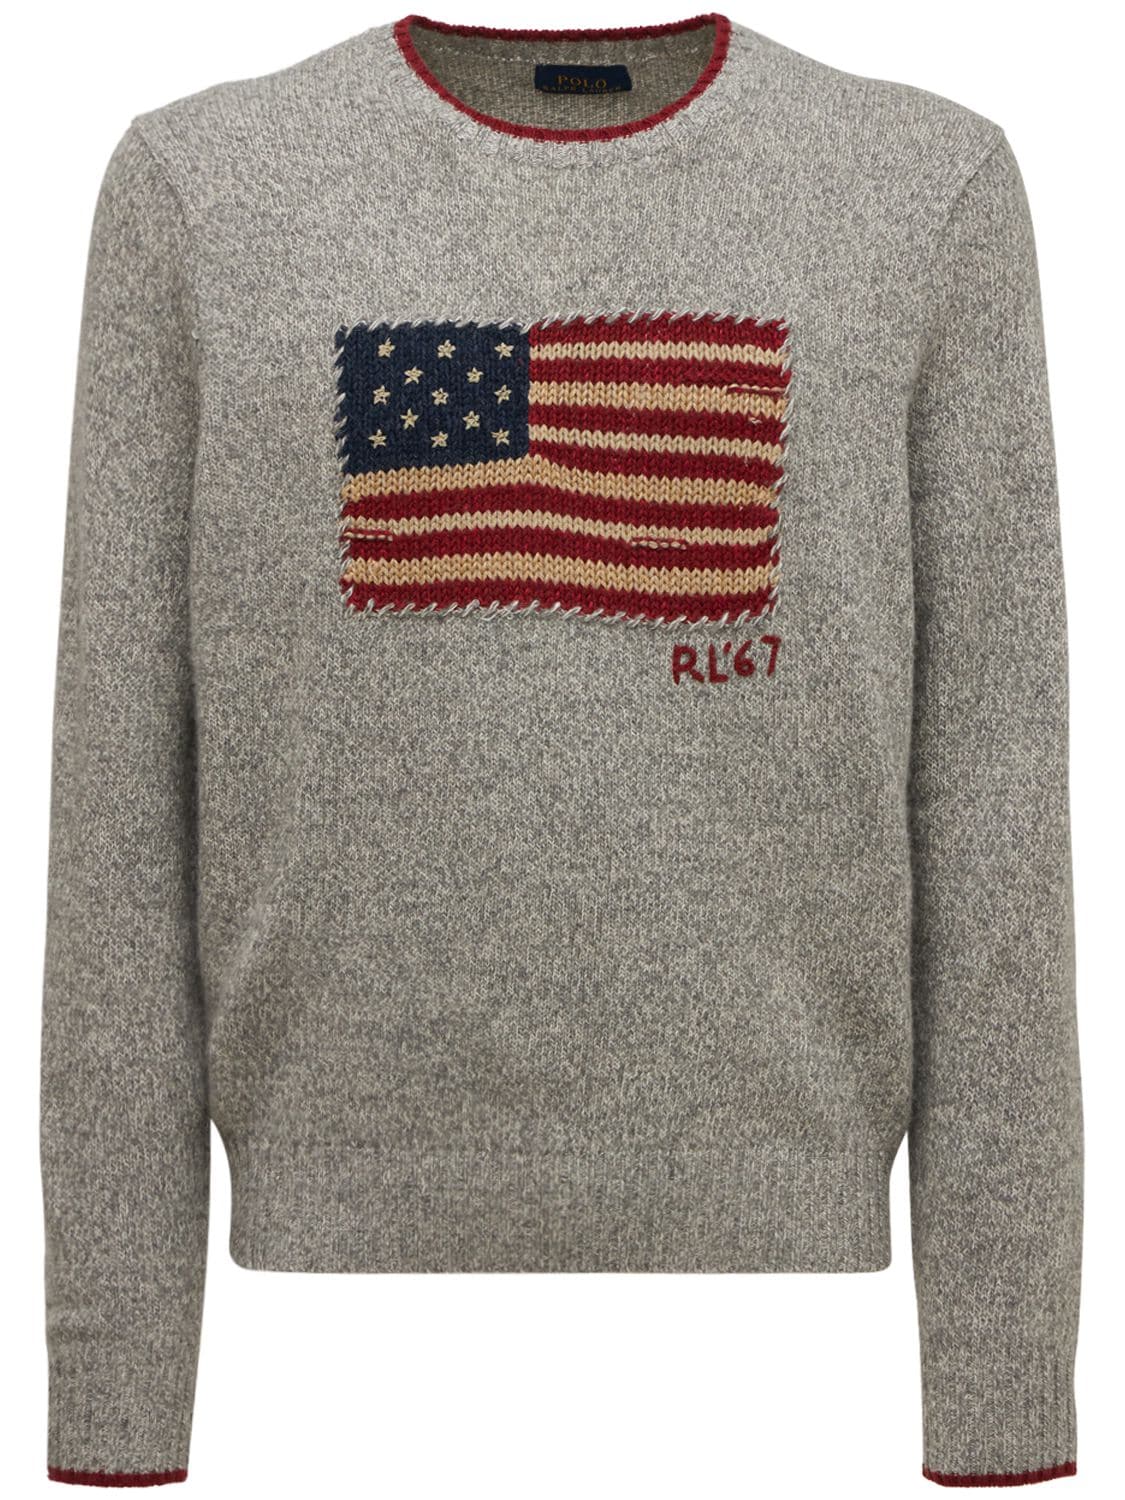 Ralph Lauren Sweater American Flag -  Canada